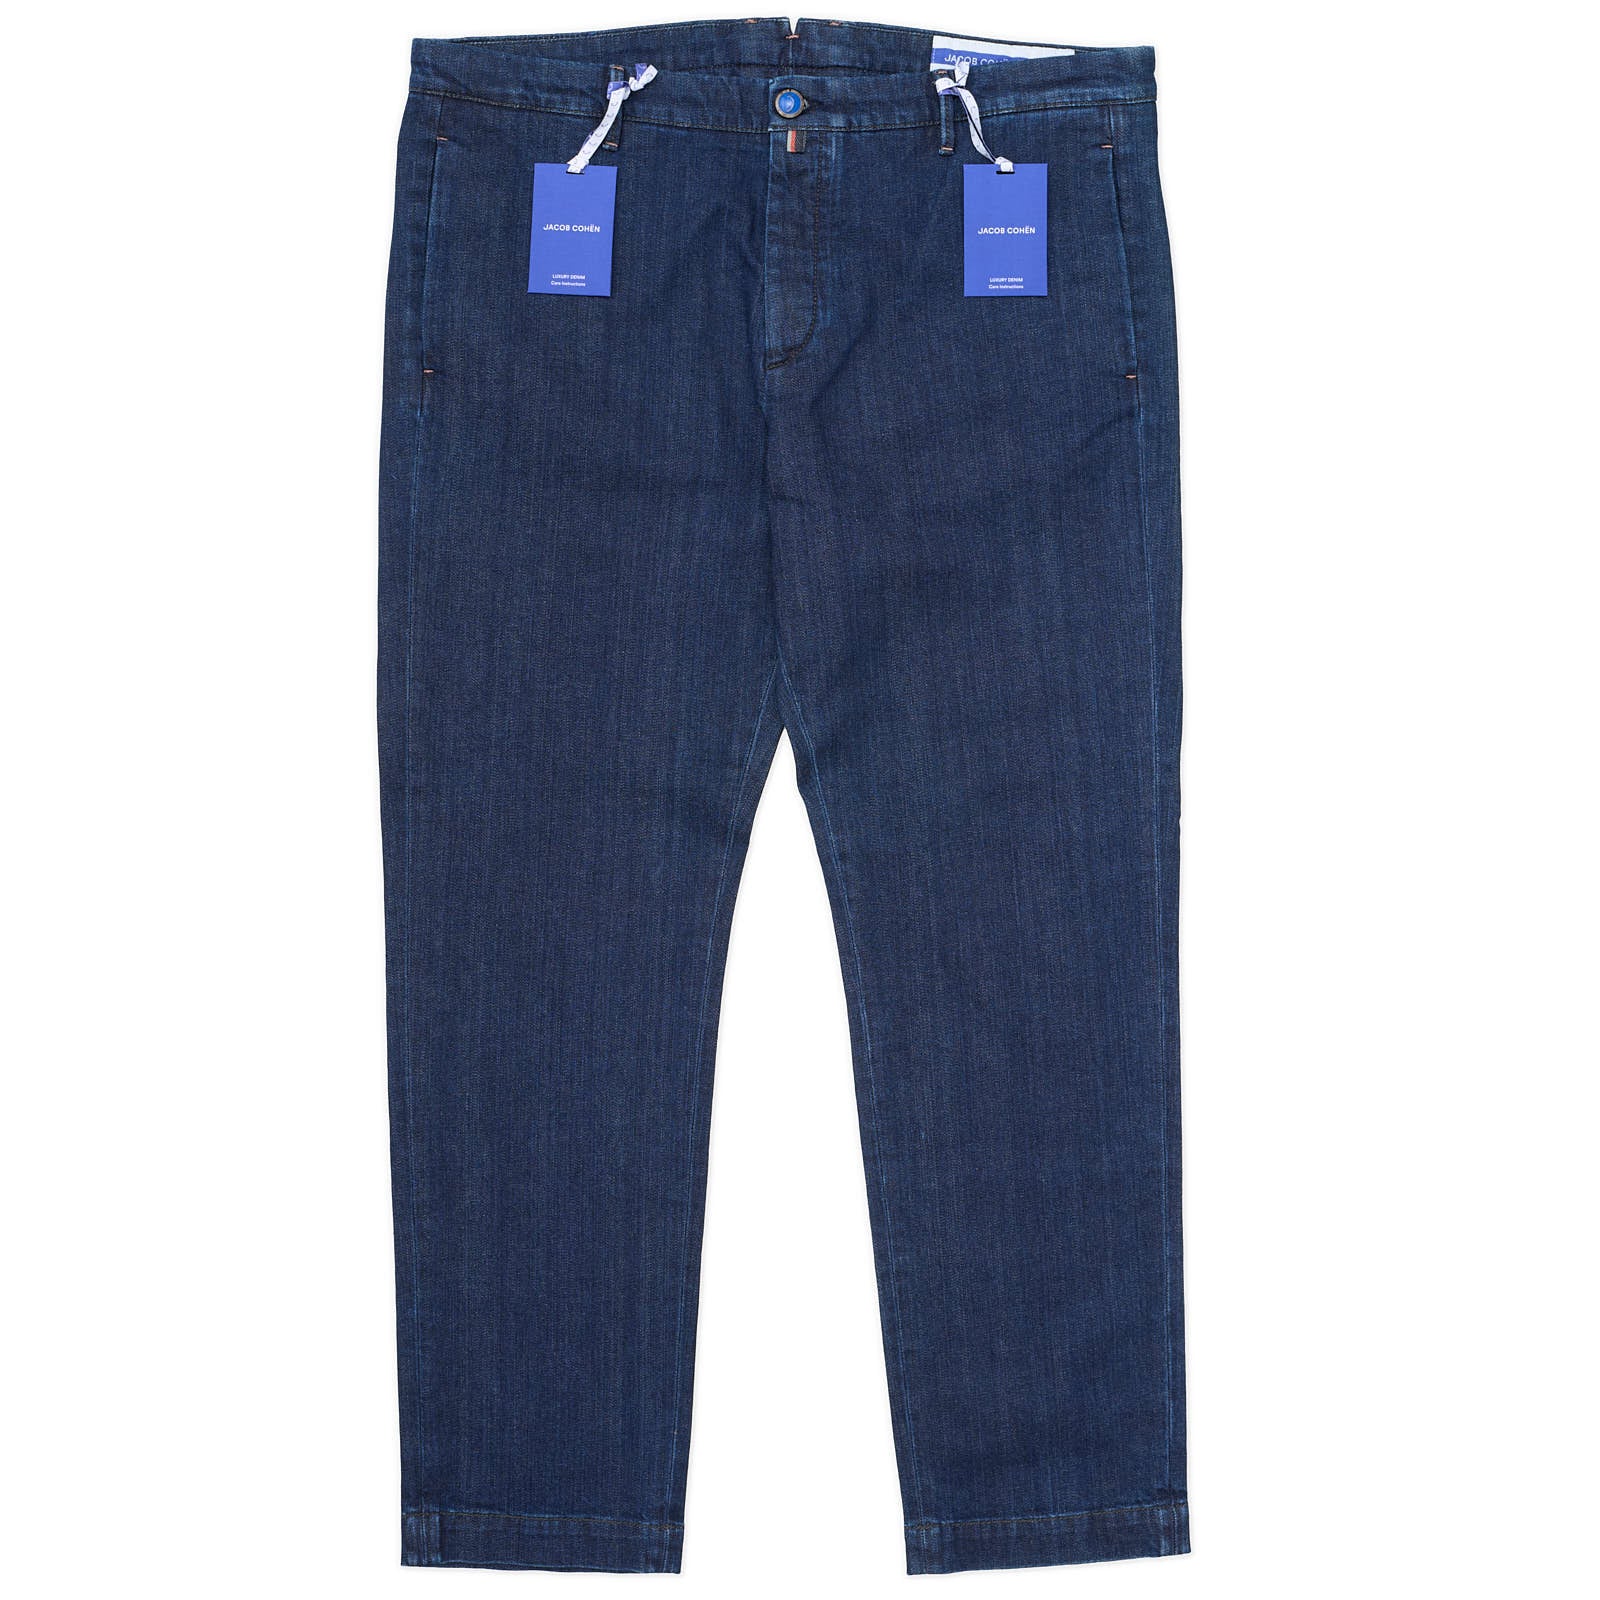 JACOB COHEN "Adam" Handmade Blue Denim Cotton Straight Fit Jeans NEW US 40